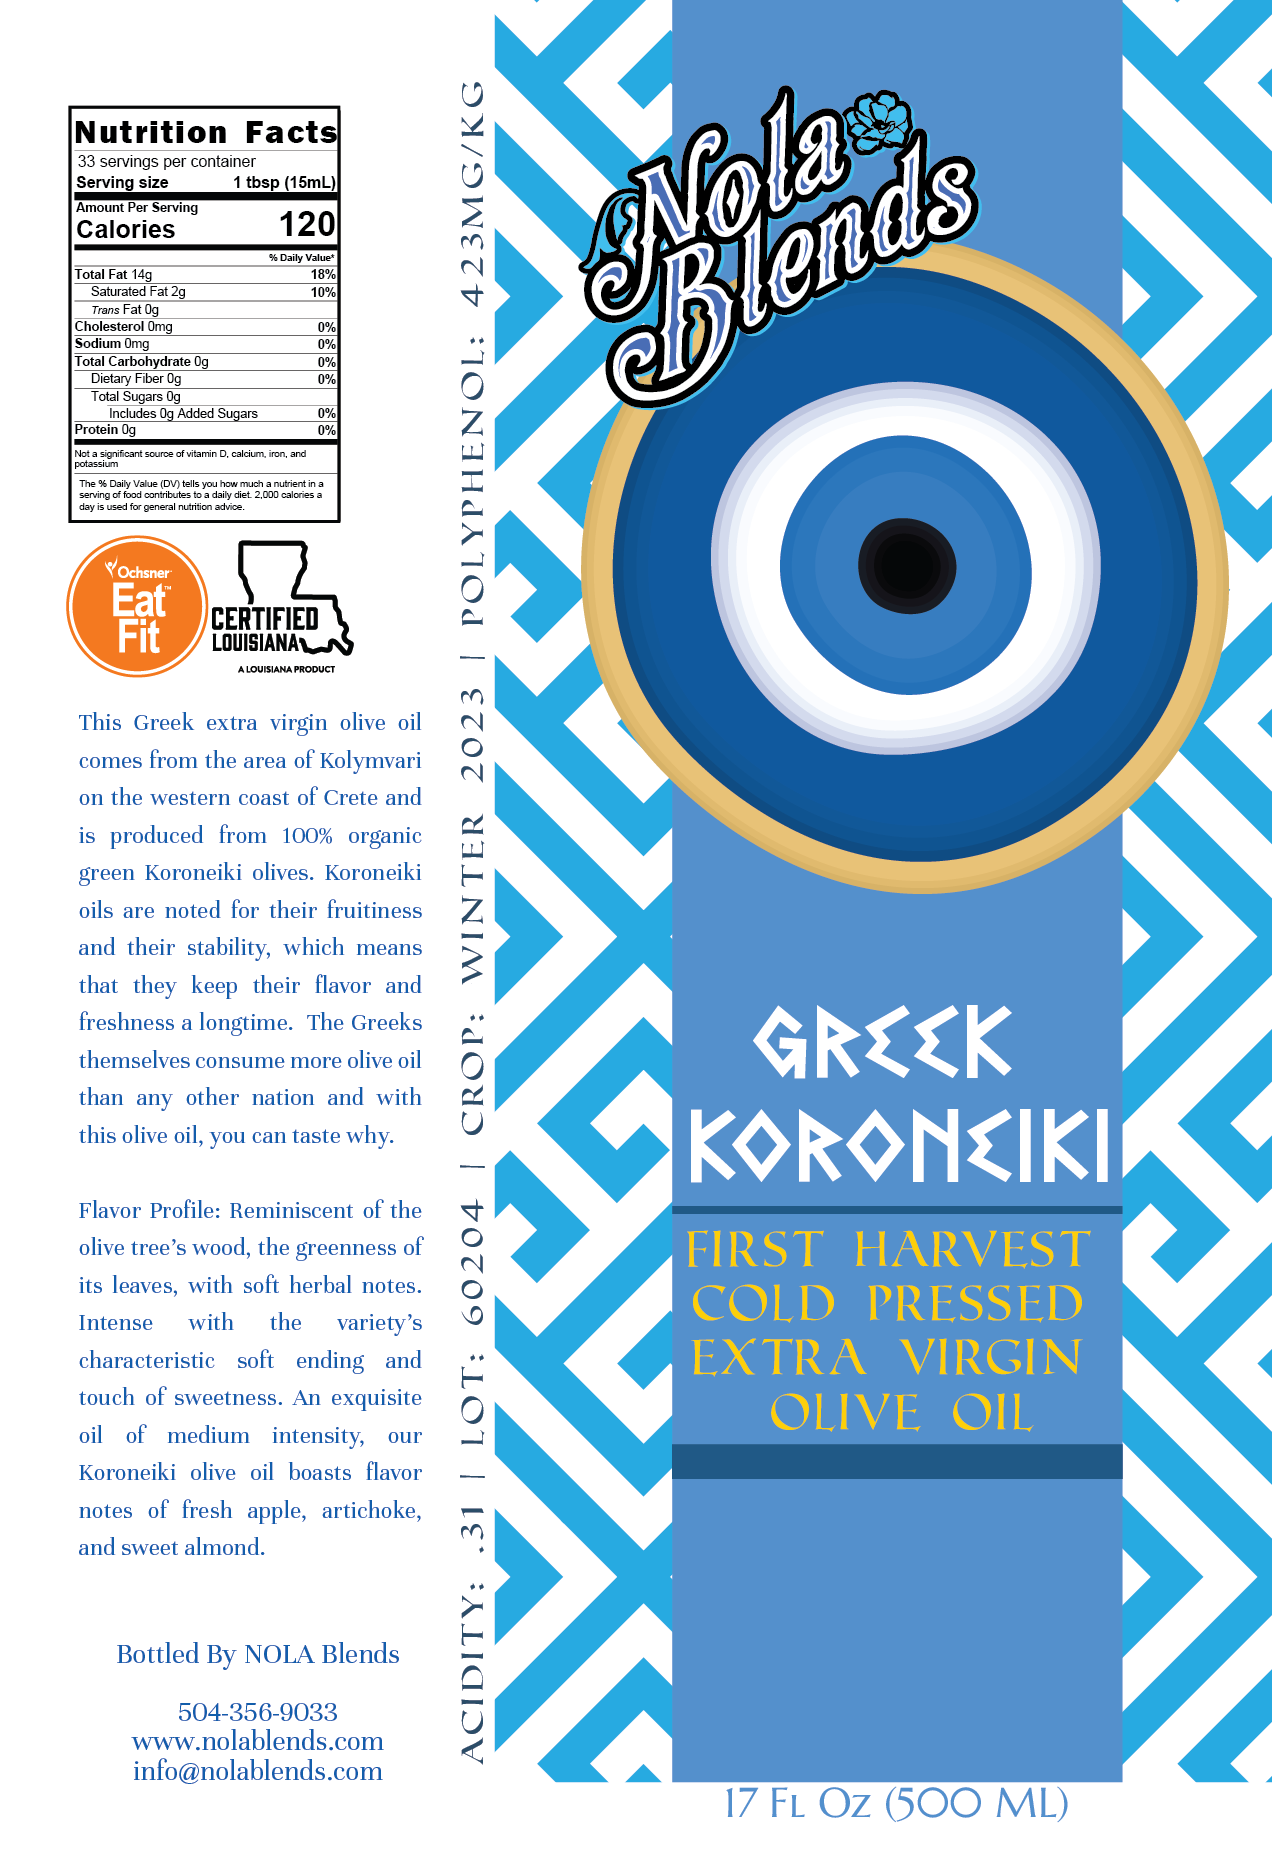 Greek Koreneiki - Extra Virgin Olive Oil